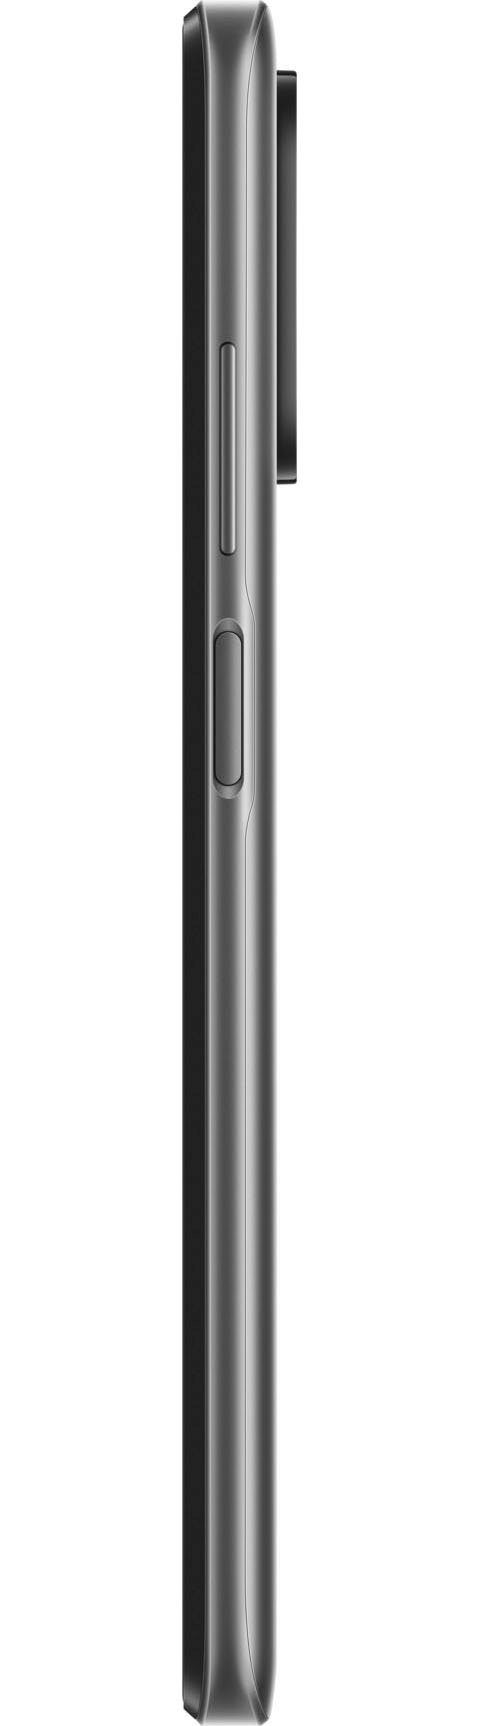 GB Redmi cm/6,5 Carbon Speicherplatz, Gray (16,51 Zoll, 10 MP Xiaomi 50 Kamera) 2022 Smartphone 64